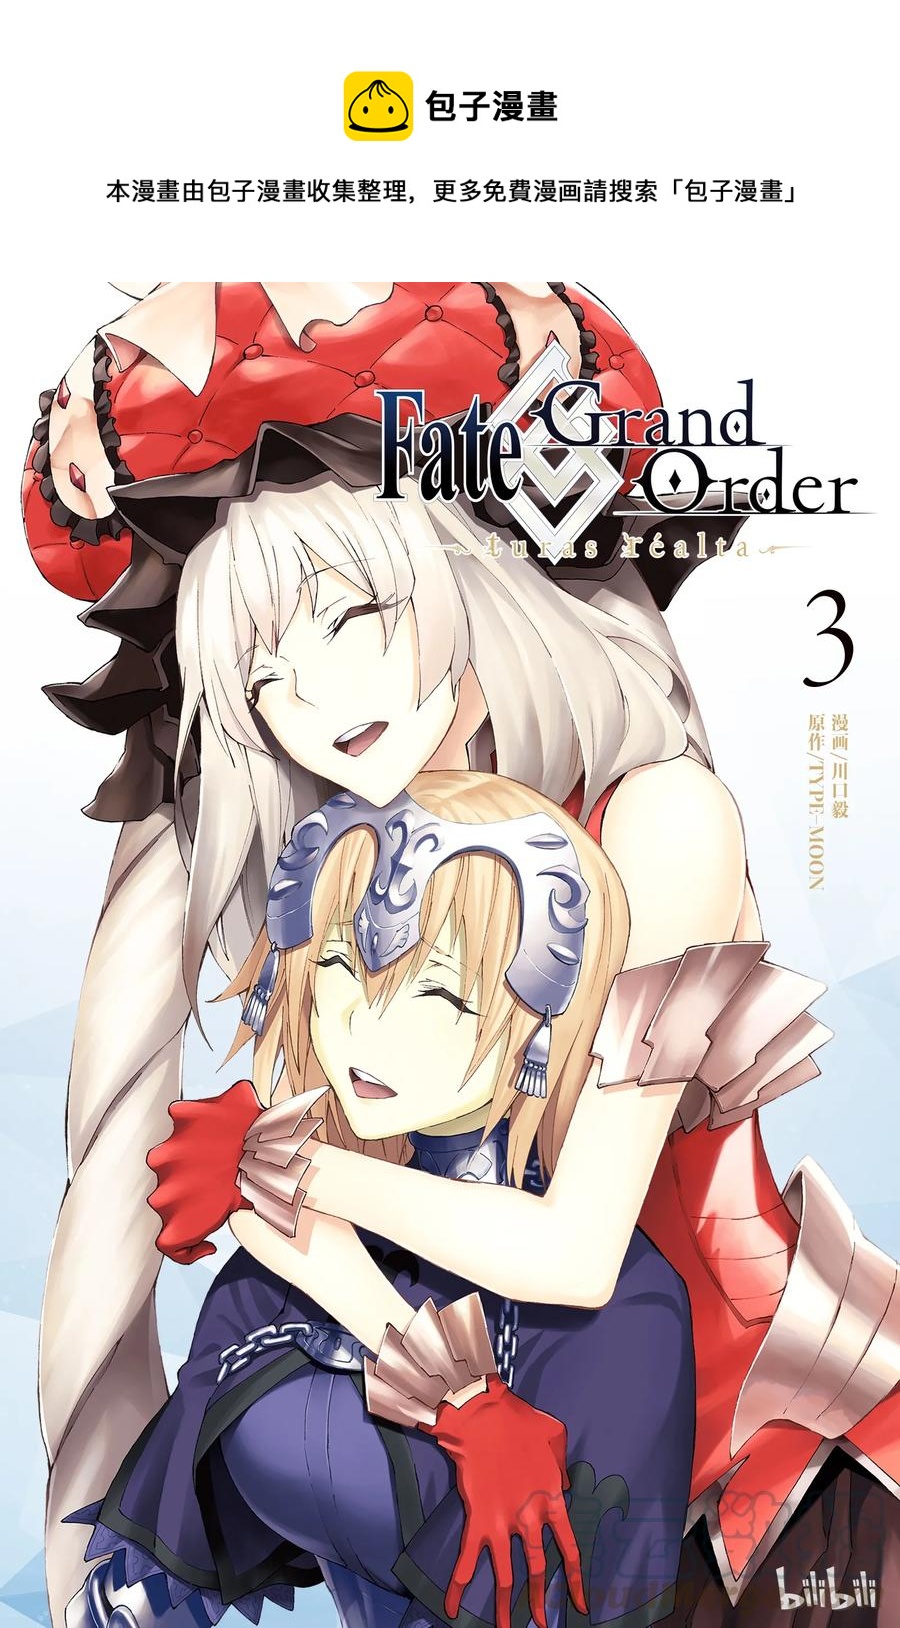 Fate/Grand Order-turas realta- - 10 第一特異點⑤ - 1